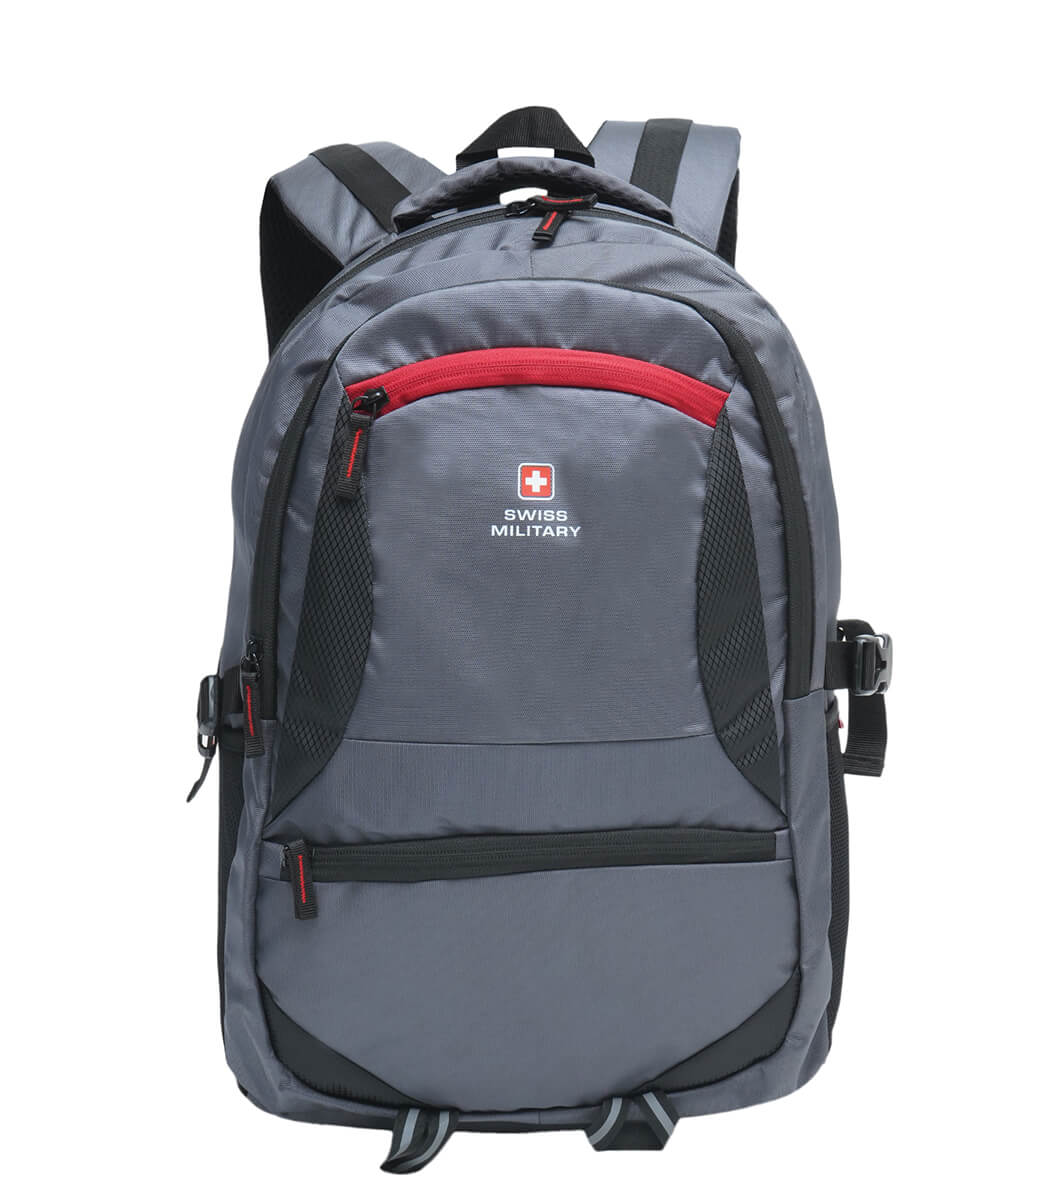 Shop Swiss Militray Laptop Backpacks - Buy Laptop Backpacks online